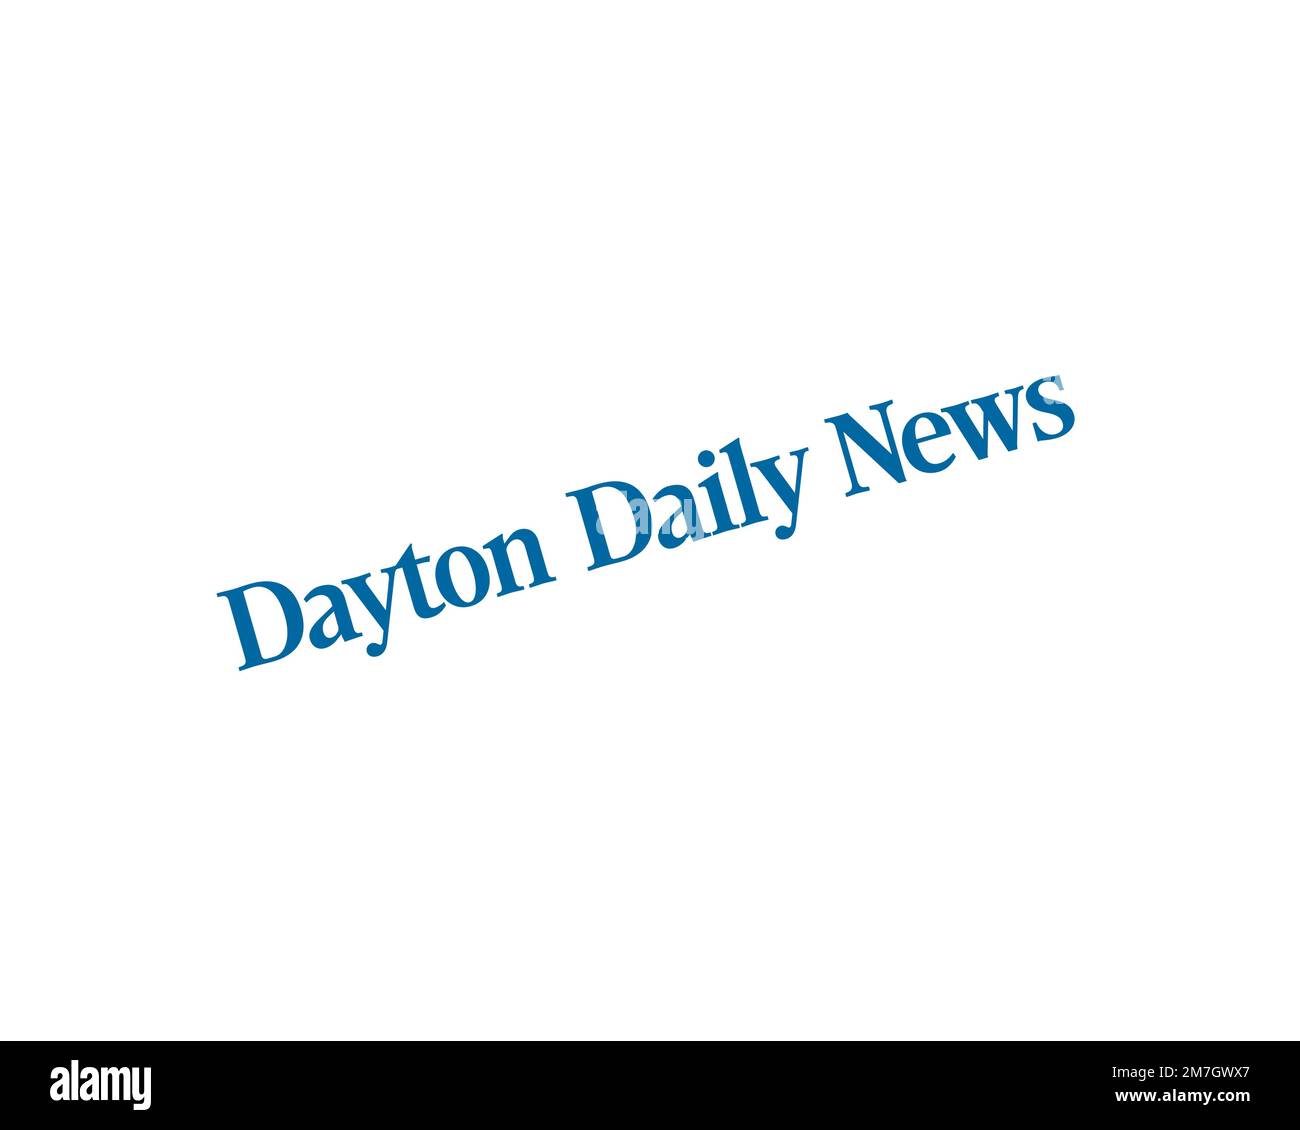 Dayton Daily News from Dayton, Ohio - ™